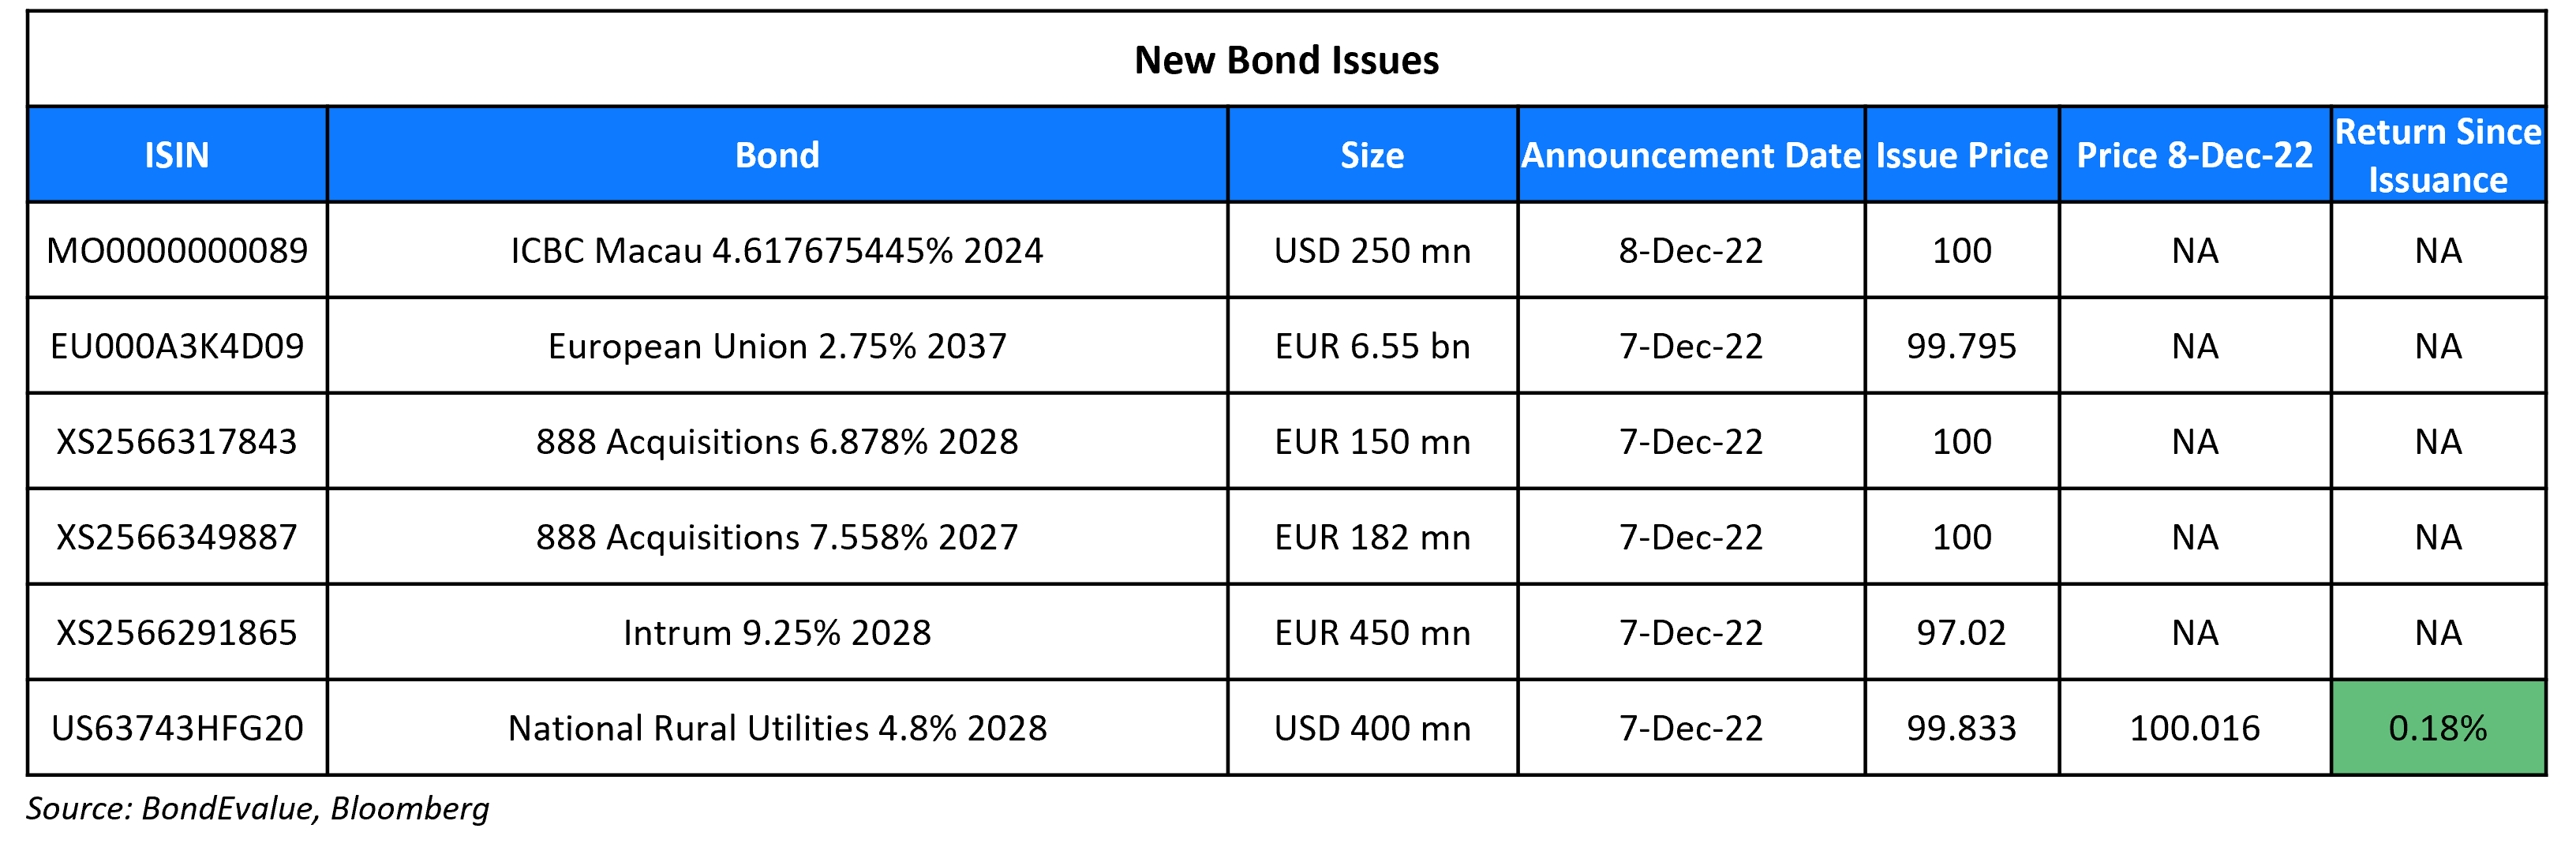 New Bond Issues 8 Dec 22